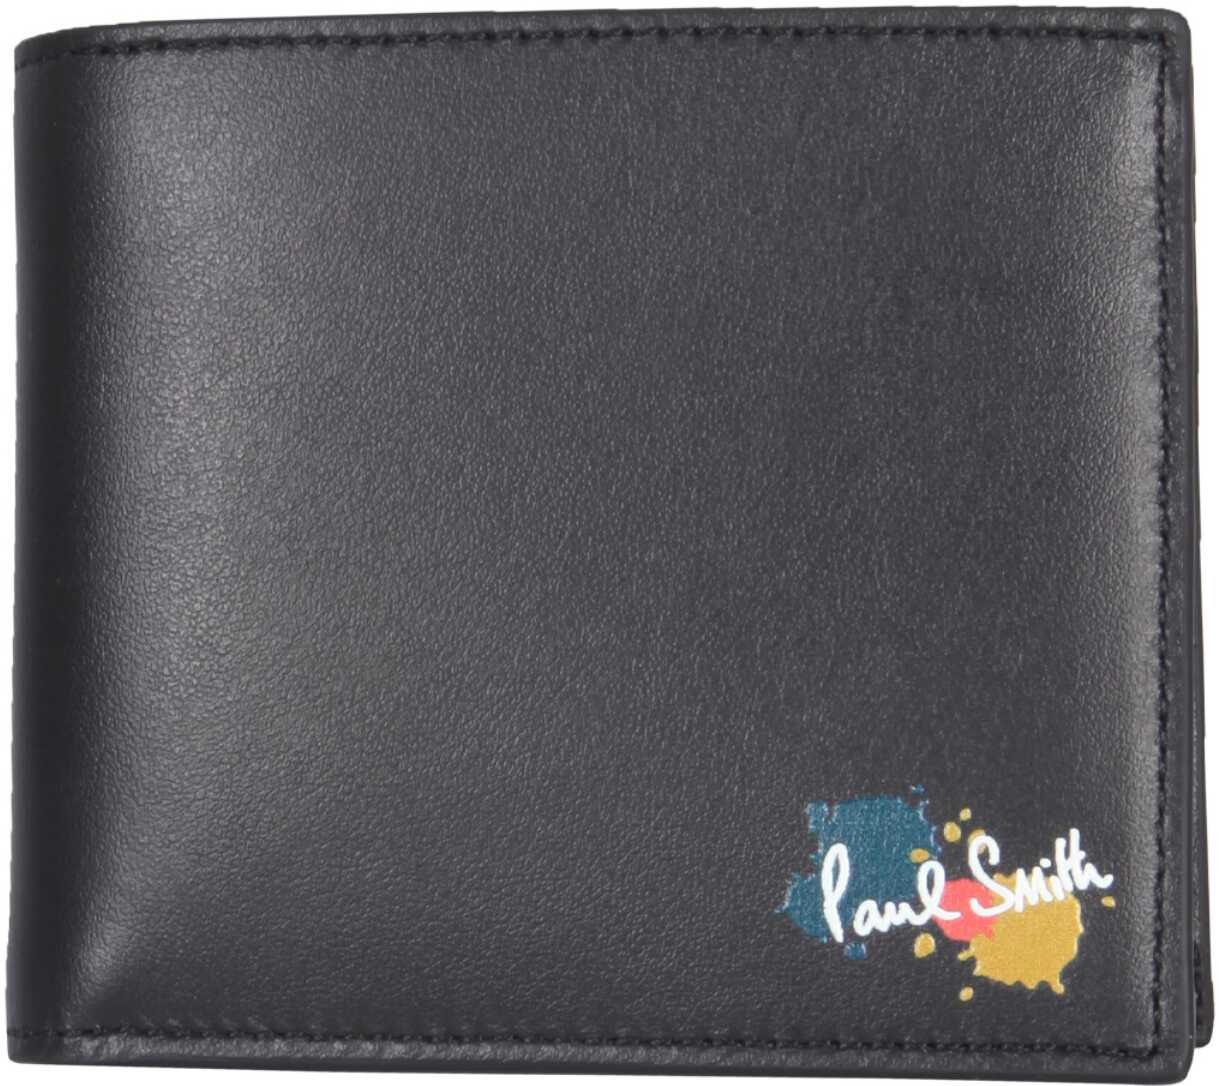 Paul Smith Leather Wallet M1A/4833/HSPLAT_PR BLACK image